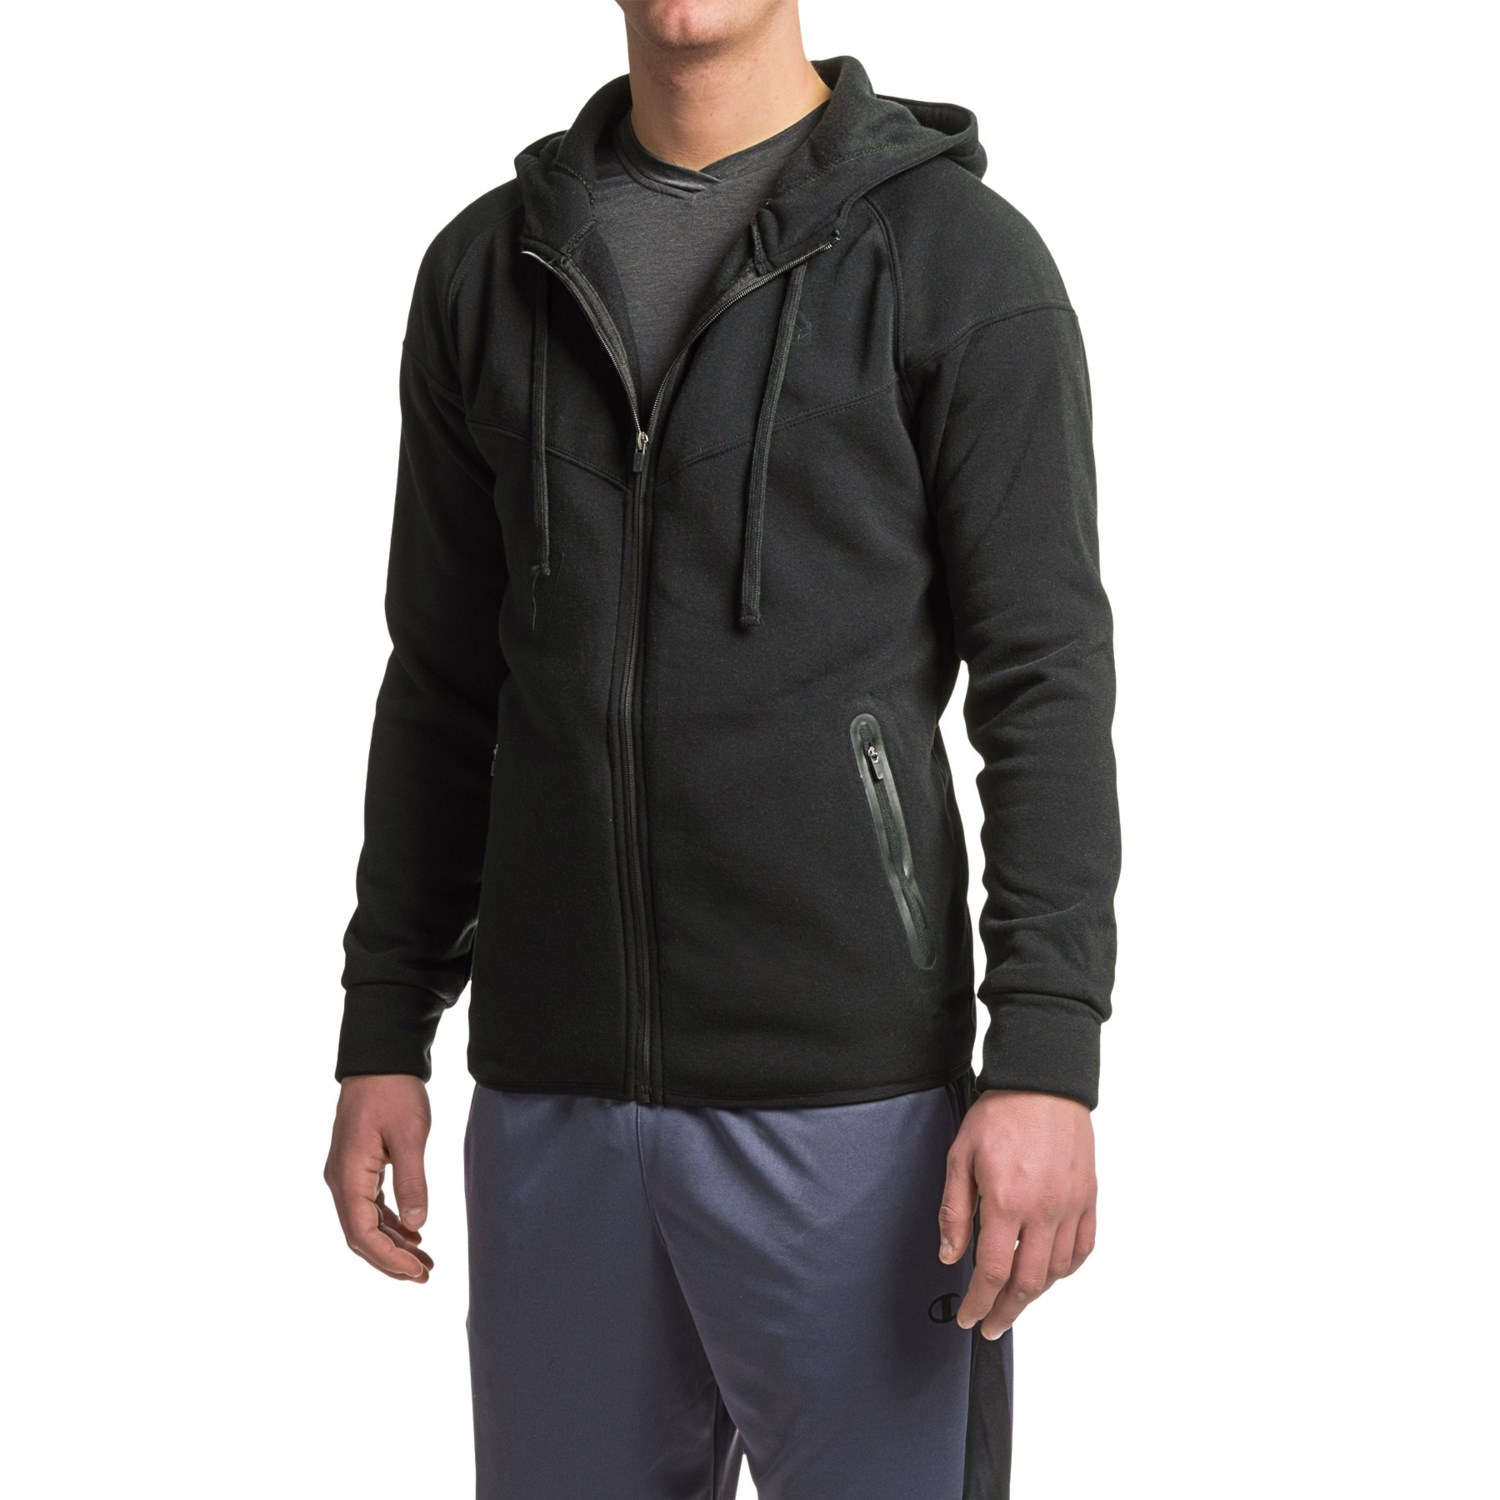 RBX Fleece Hooded Jacket (For Men) - Save 50%